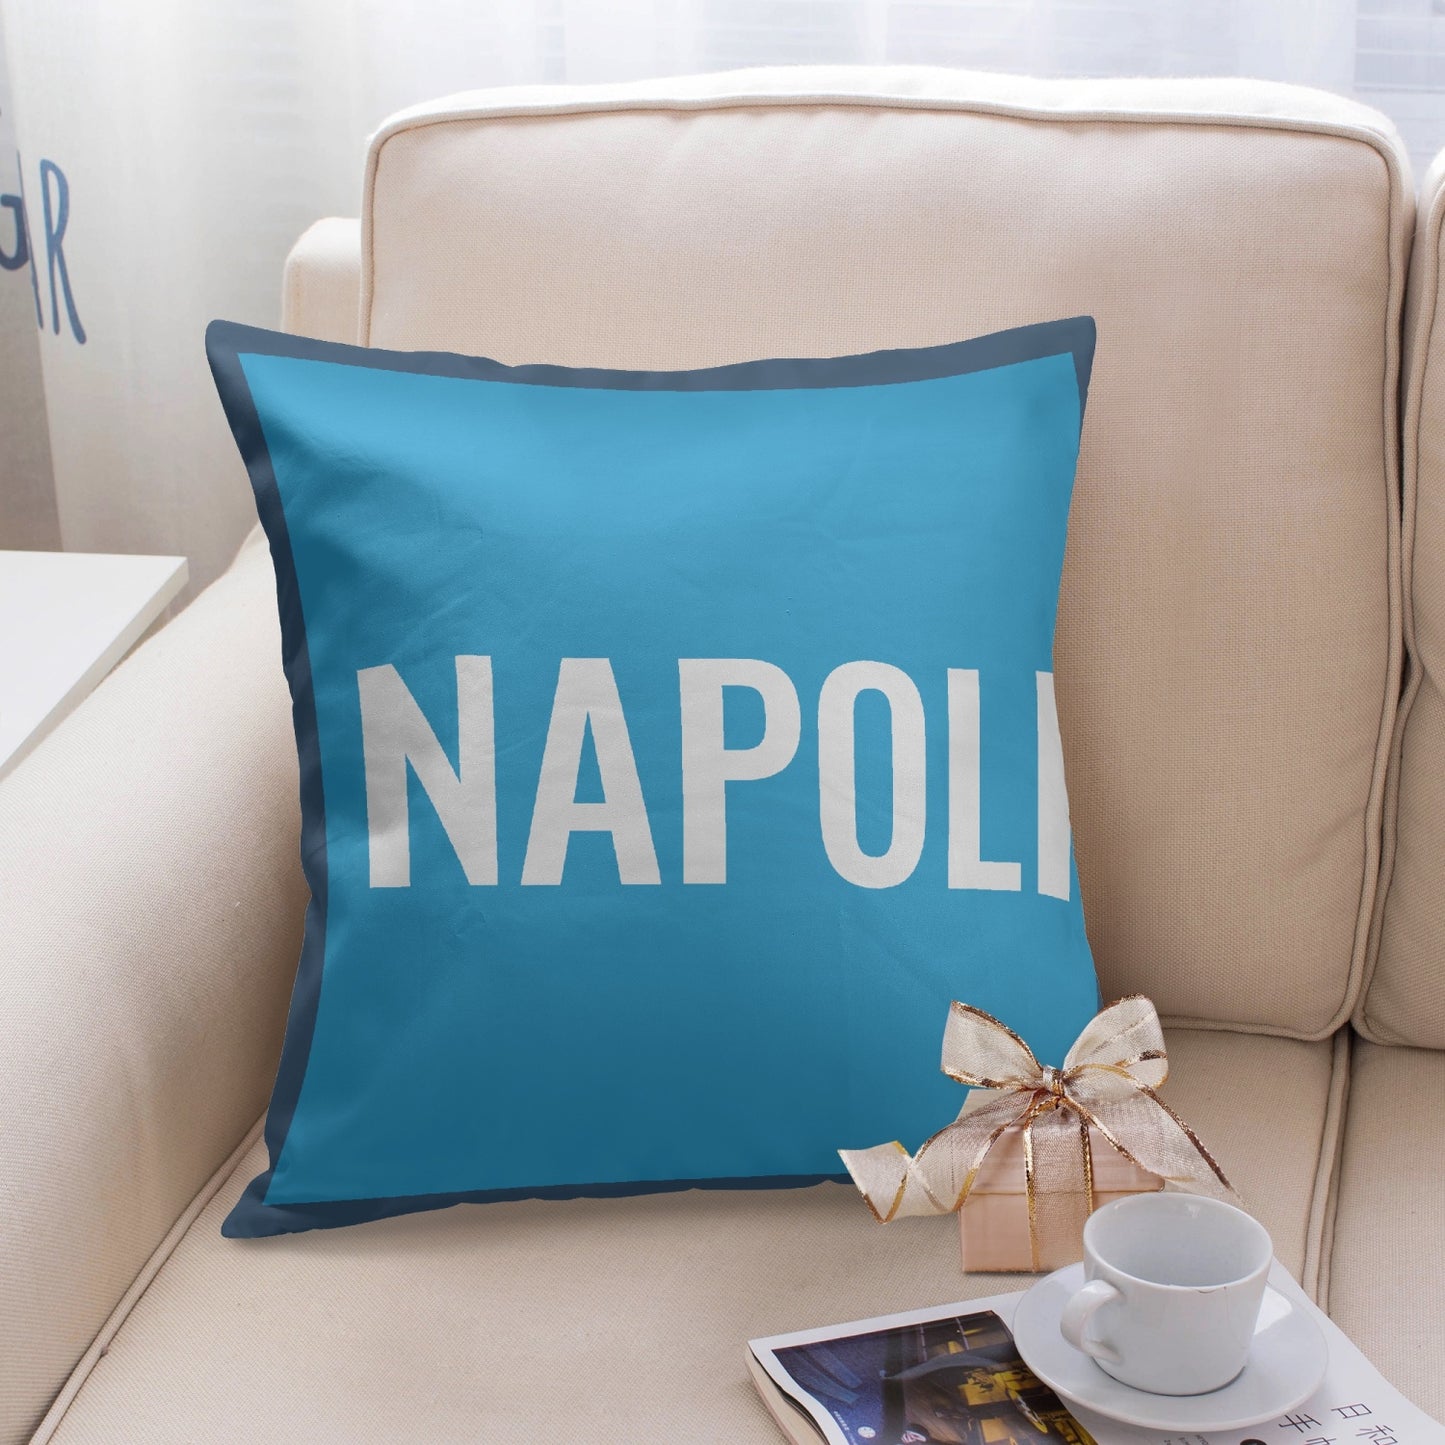 Napoli Pillow Cover